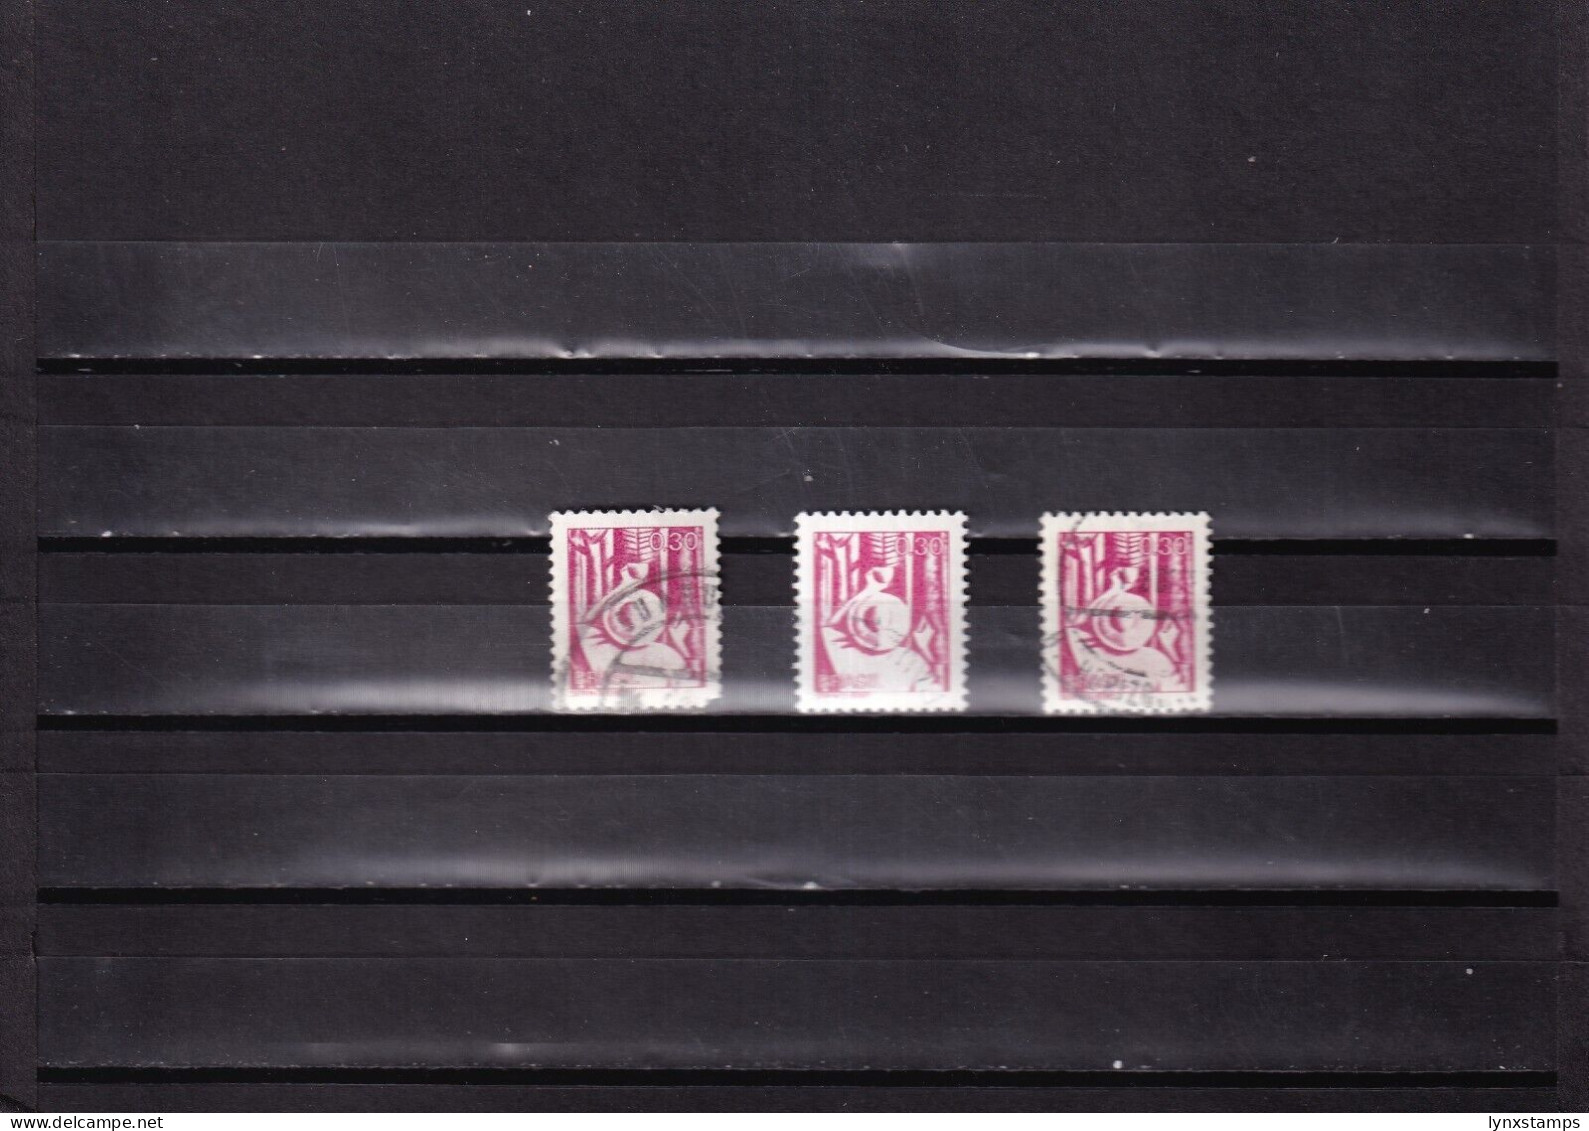 ER03 Brazil 1979 Seringueiro - Rubber Gatherer Used Stamps - Gebraucht